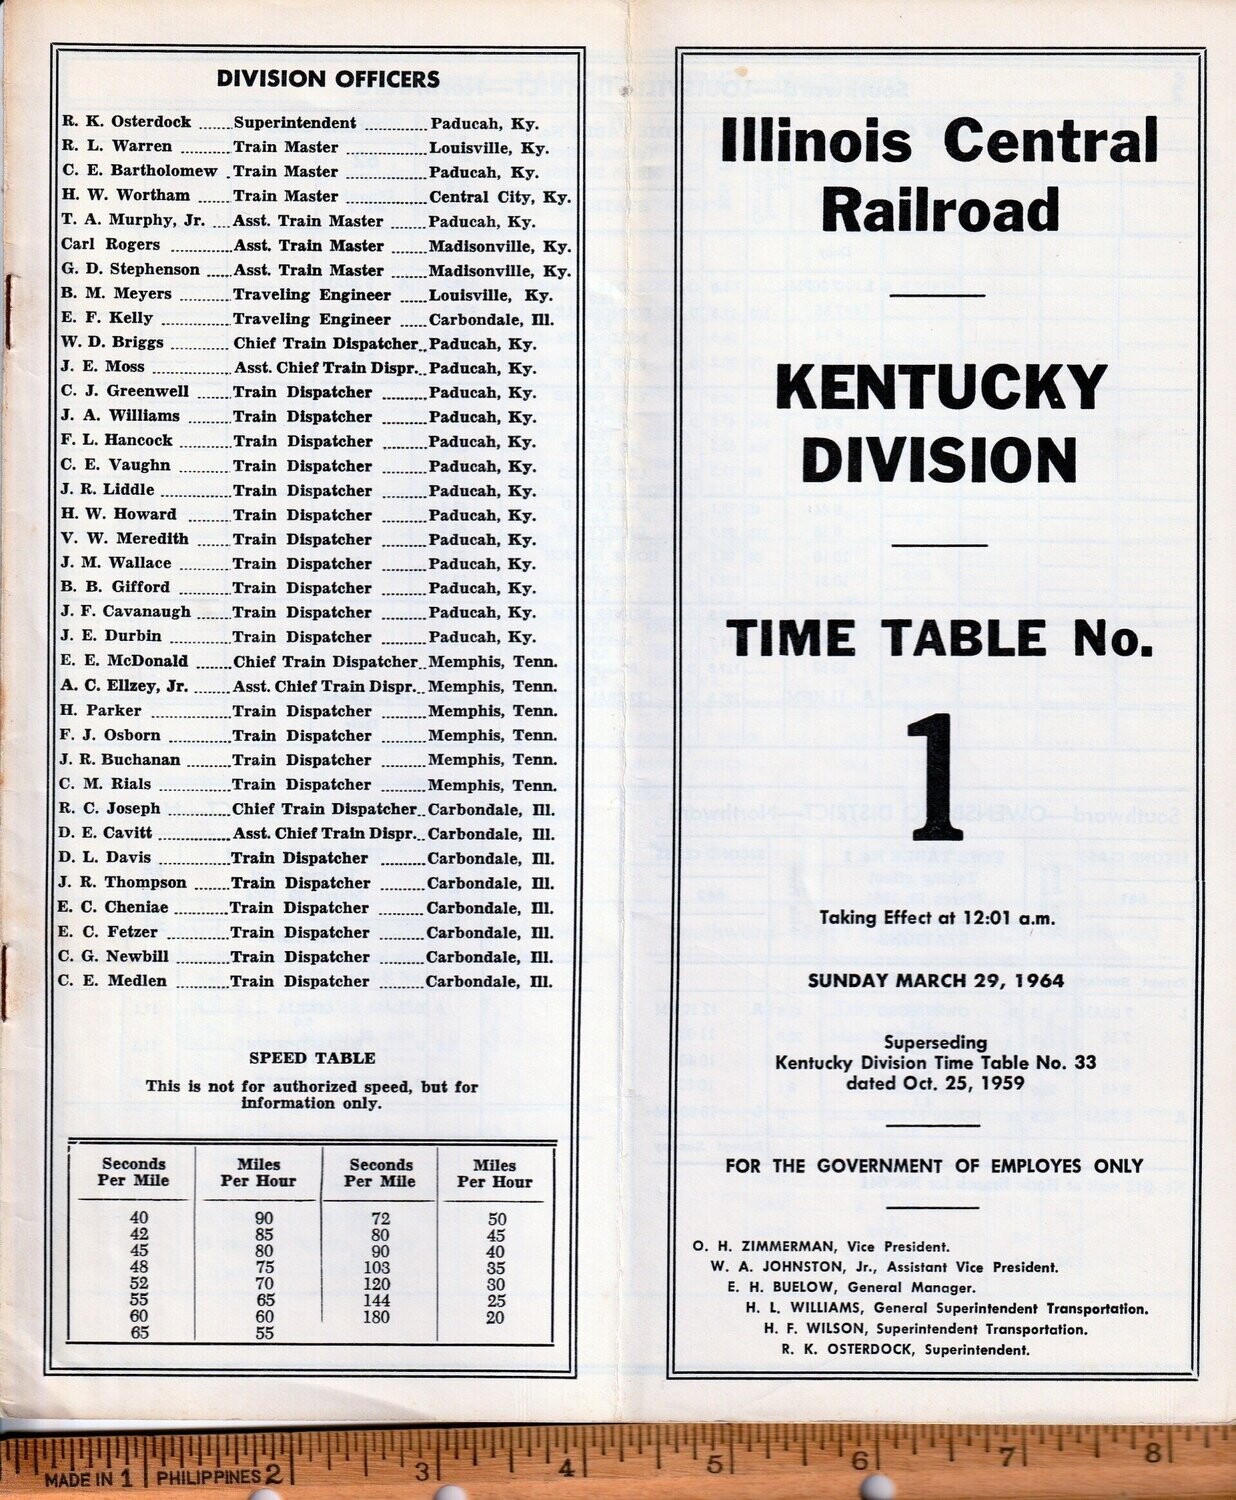 Illinois Central Kentucky Division 1964